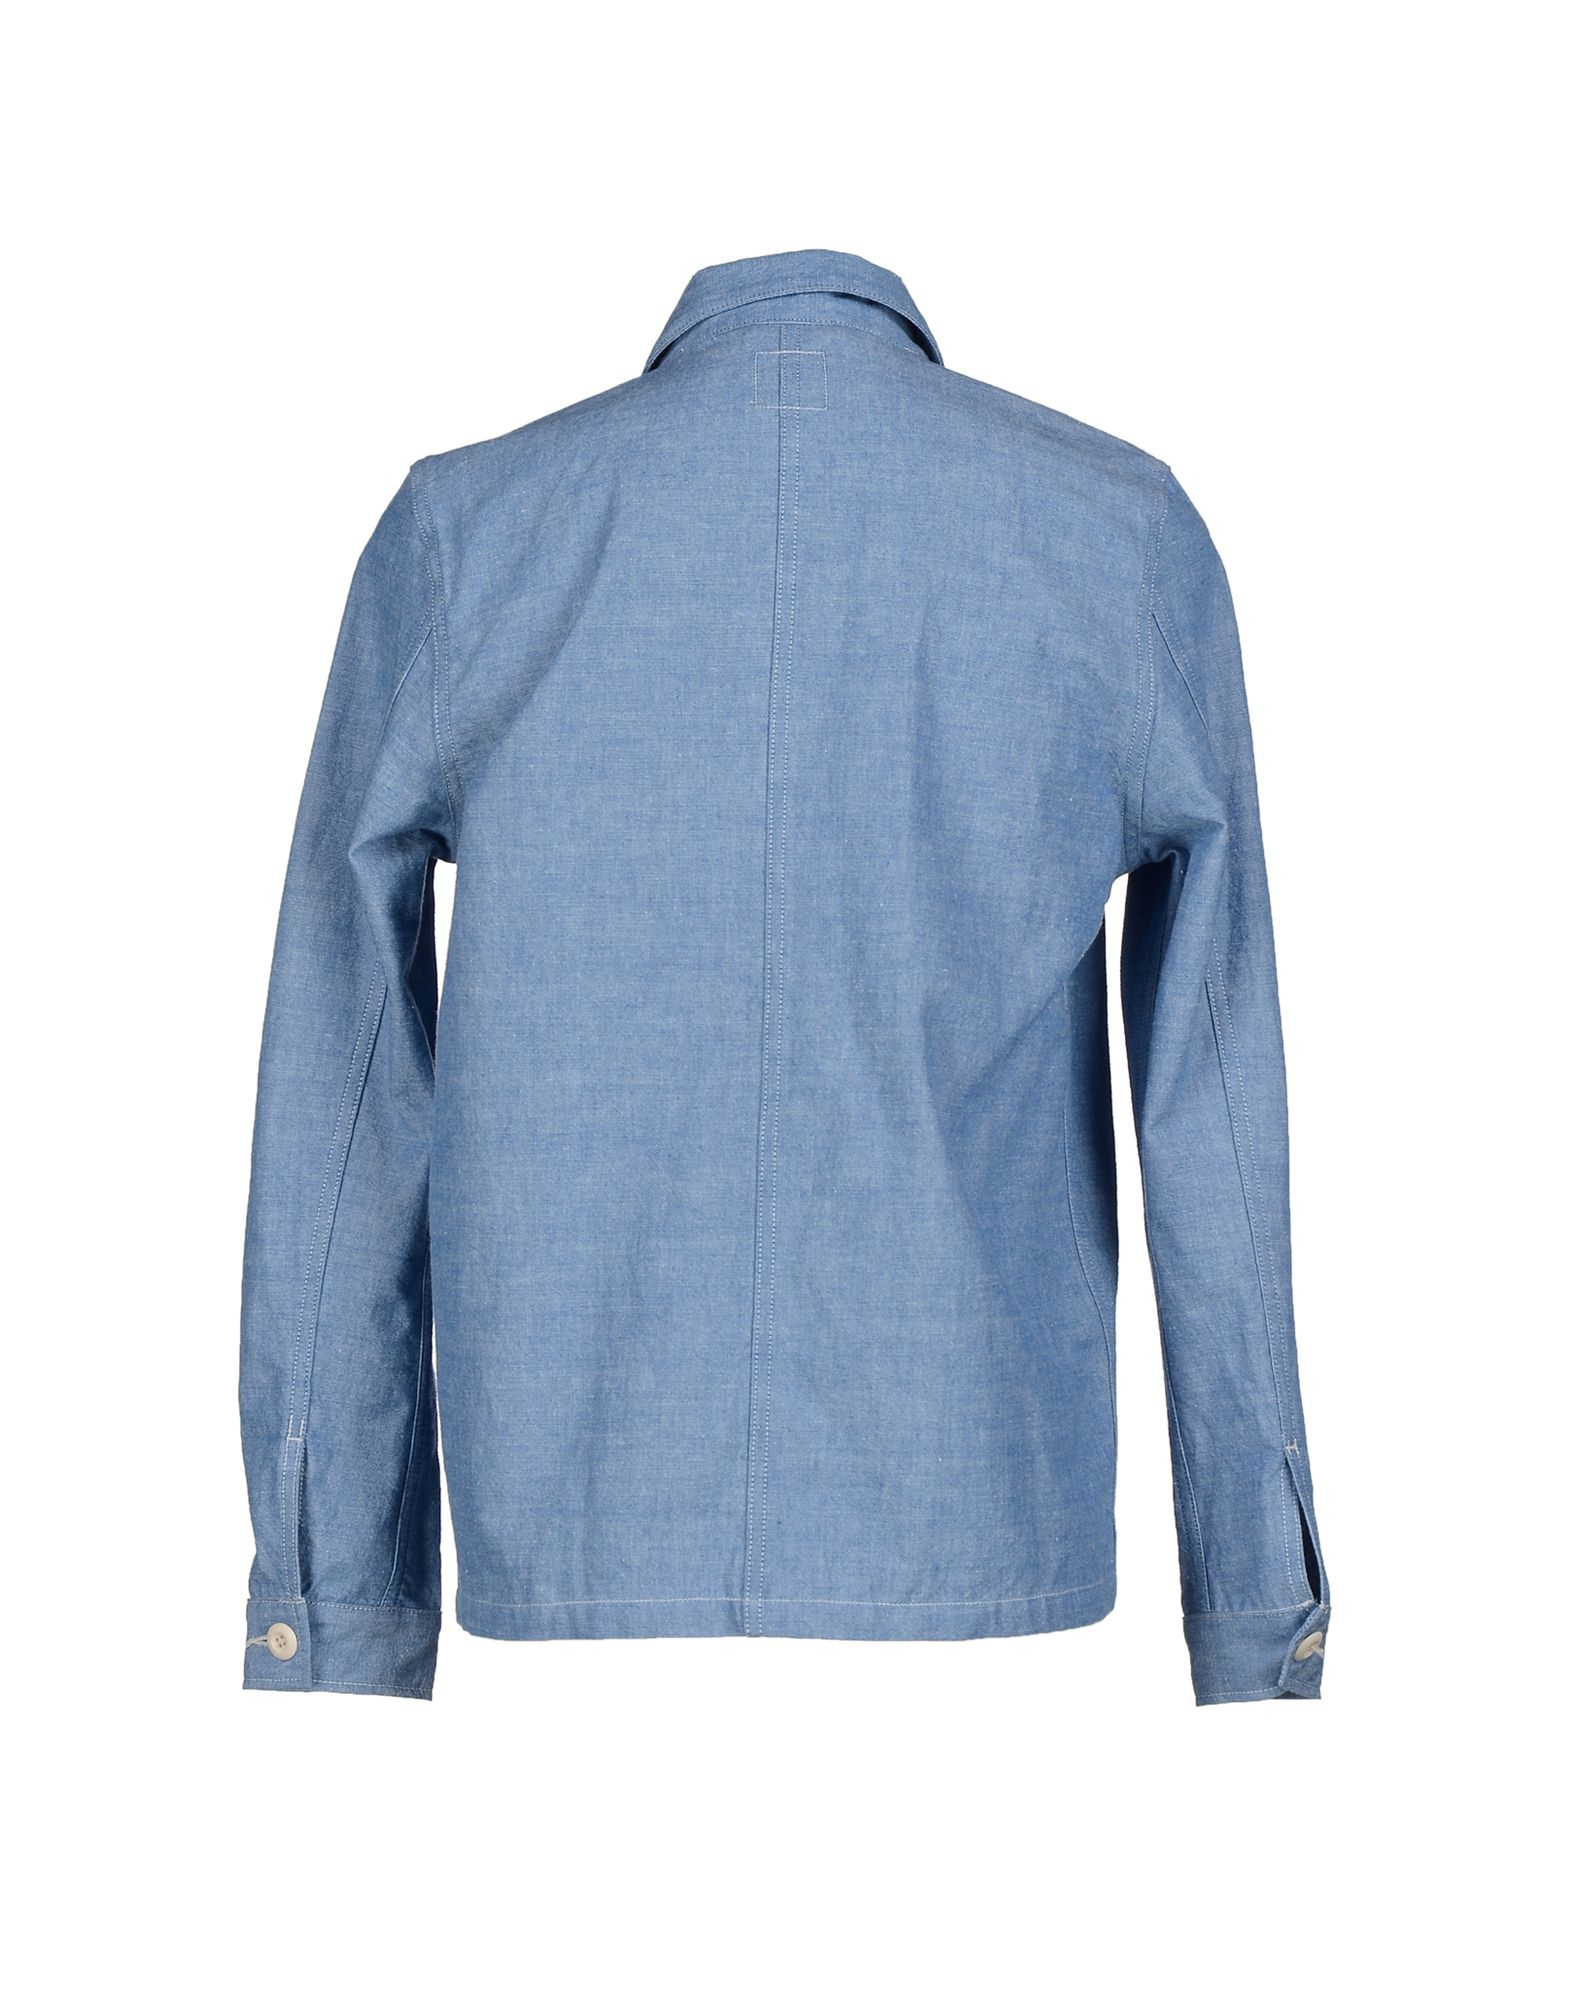 Carhartt Denim Outerwear in Blue for Men | Lyst